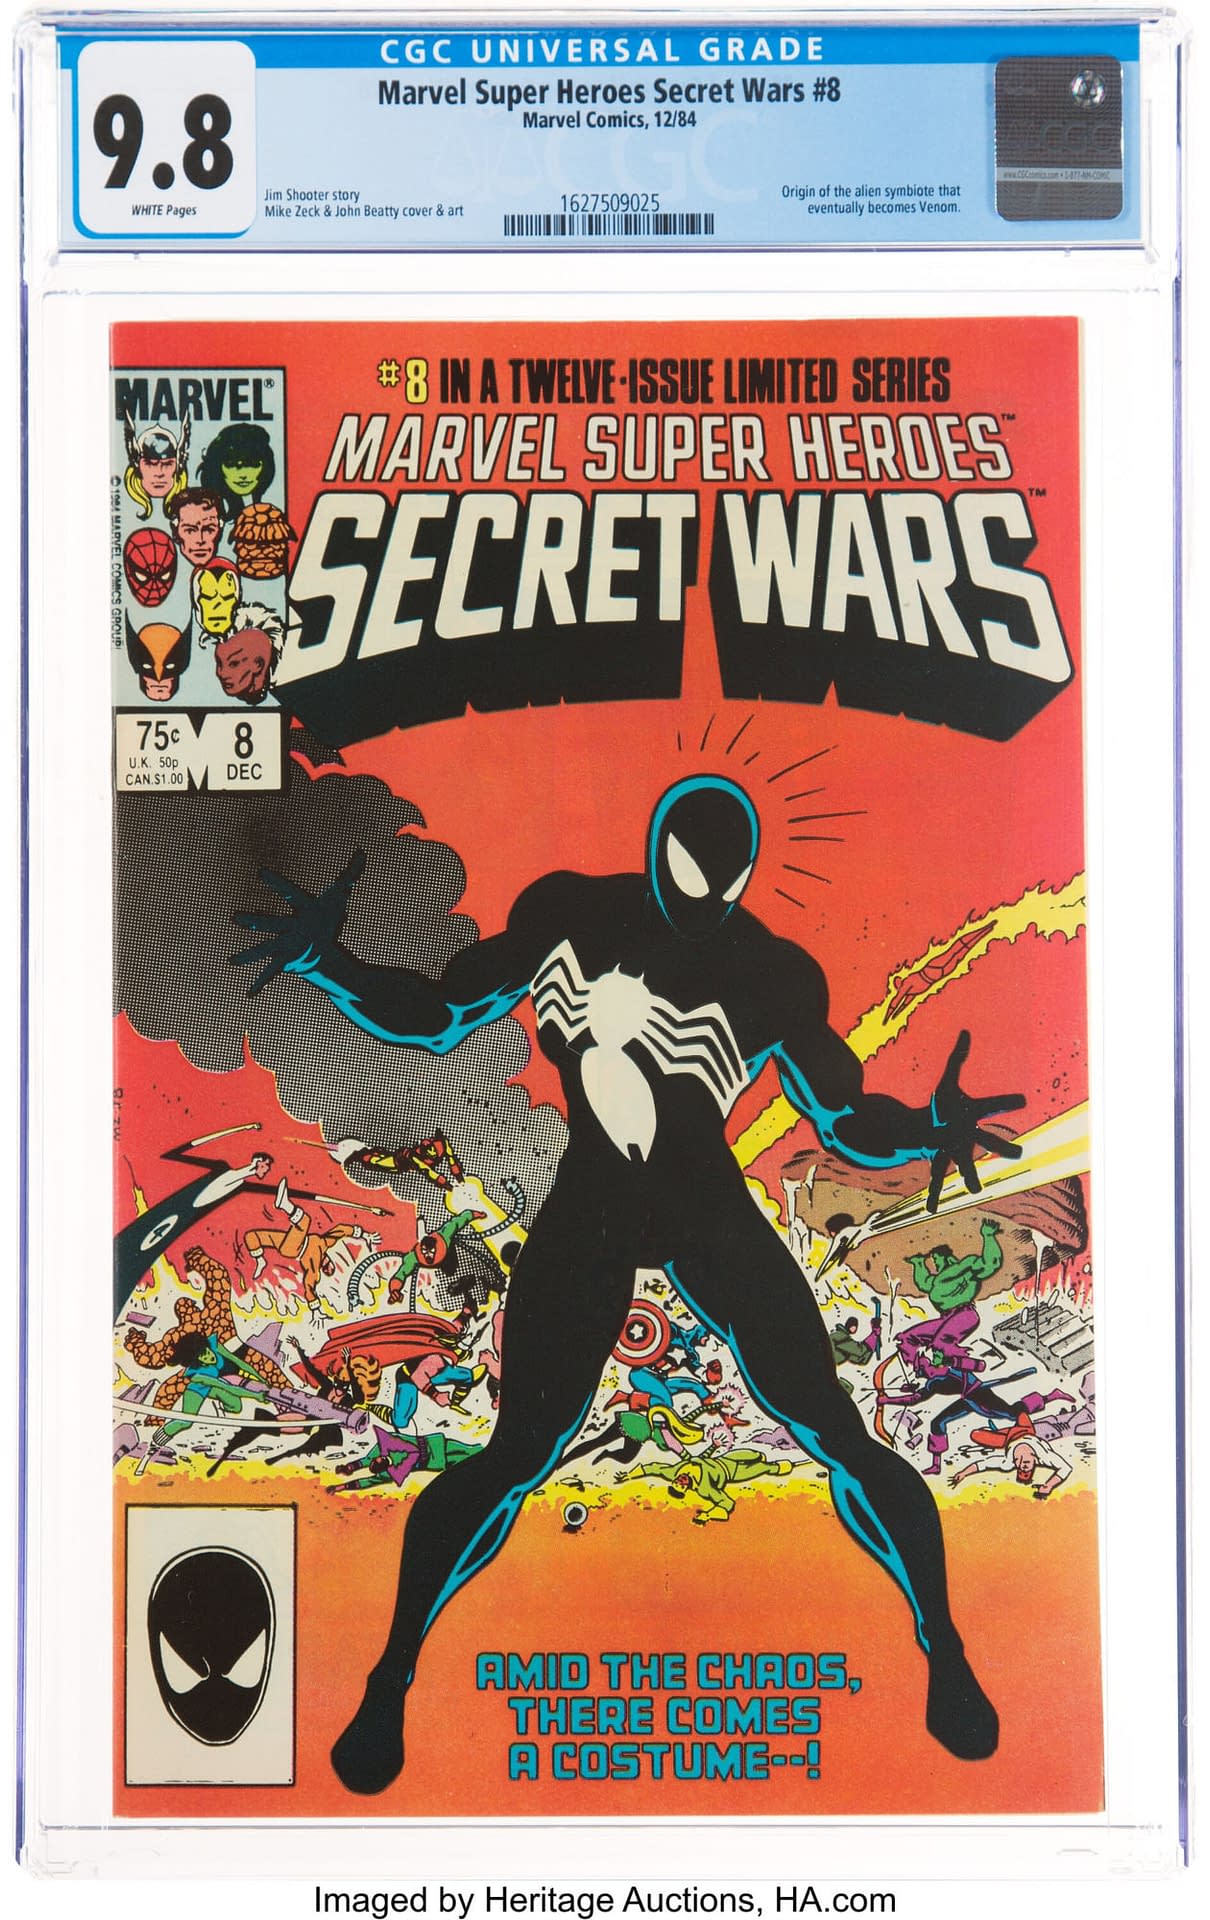 Avengers: Secret Wars Poster inspired by Secret Wars #8 (1984